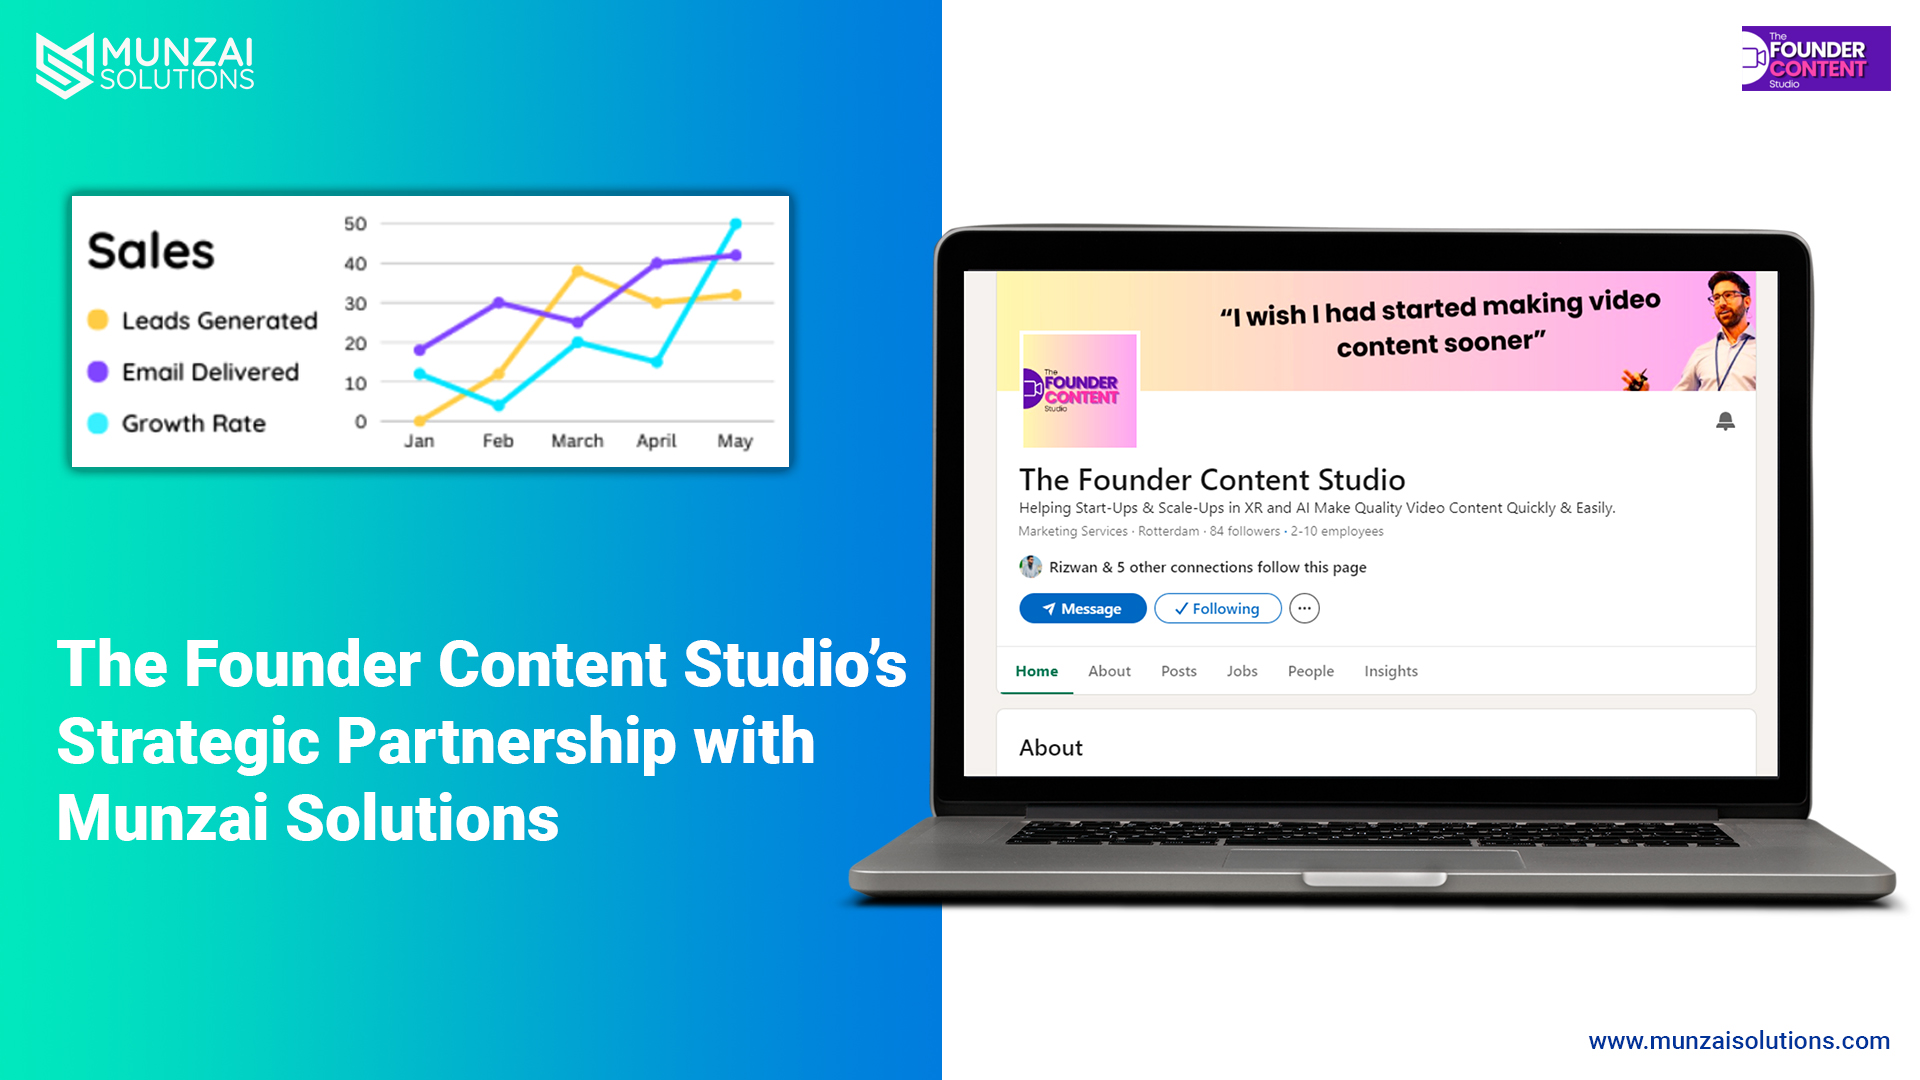 The Founder Content Studio and Munzai Strategic Partnership